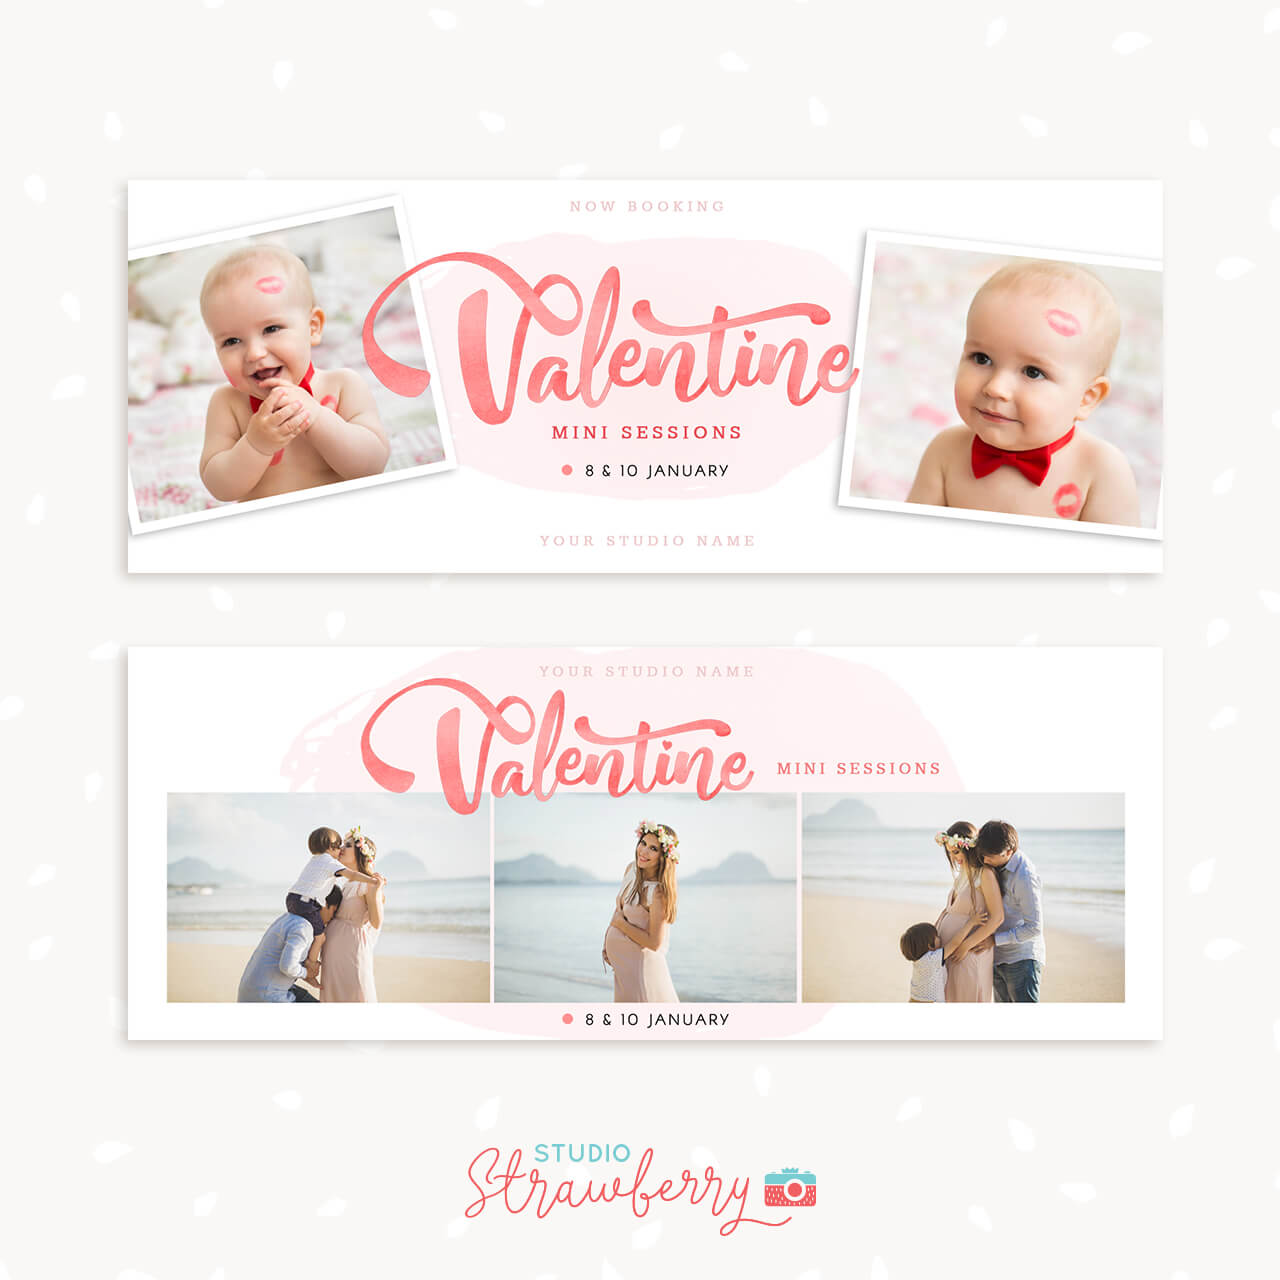 Valentine mini sessions facebook covers